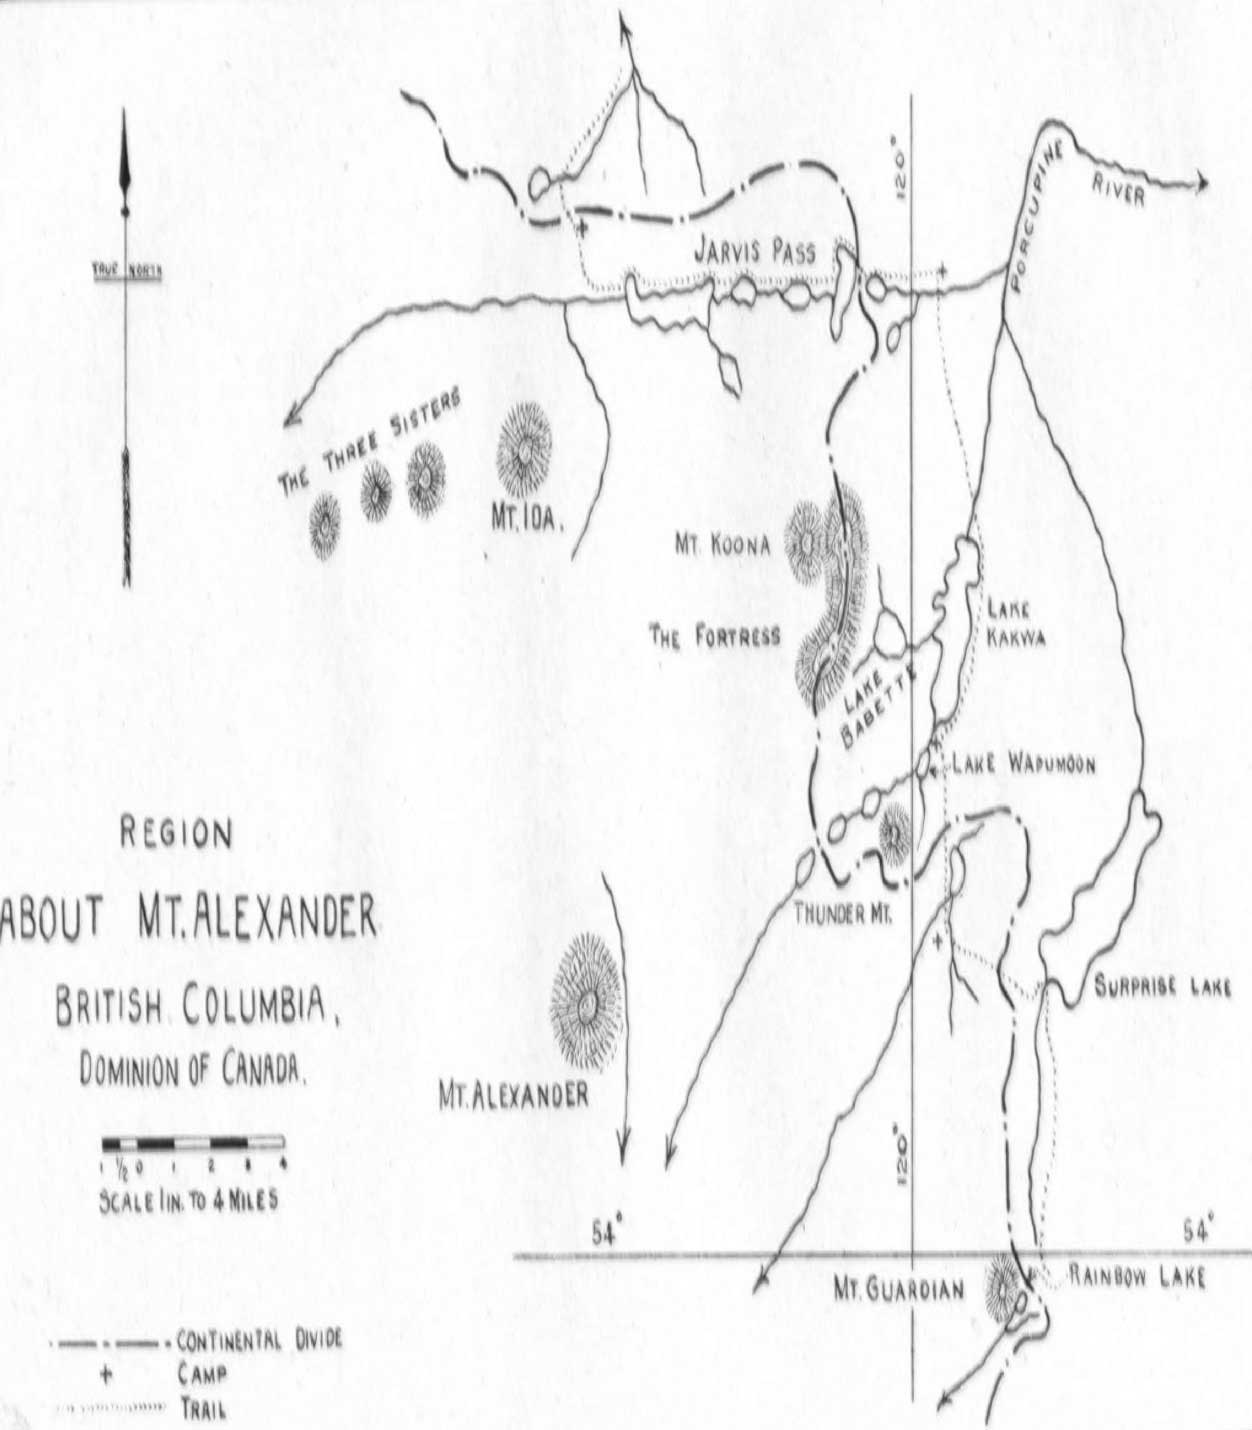 Region about Mt. Alexander
Samuel Prescott Fay, 1913